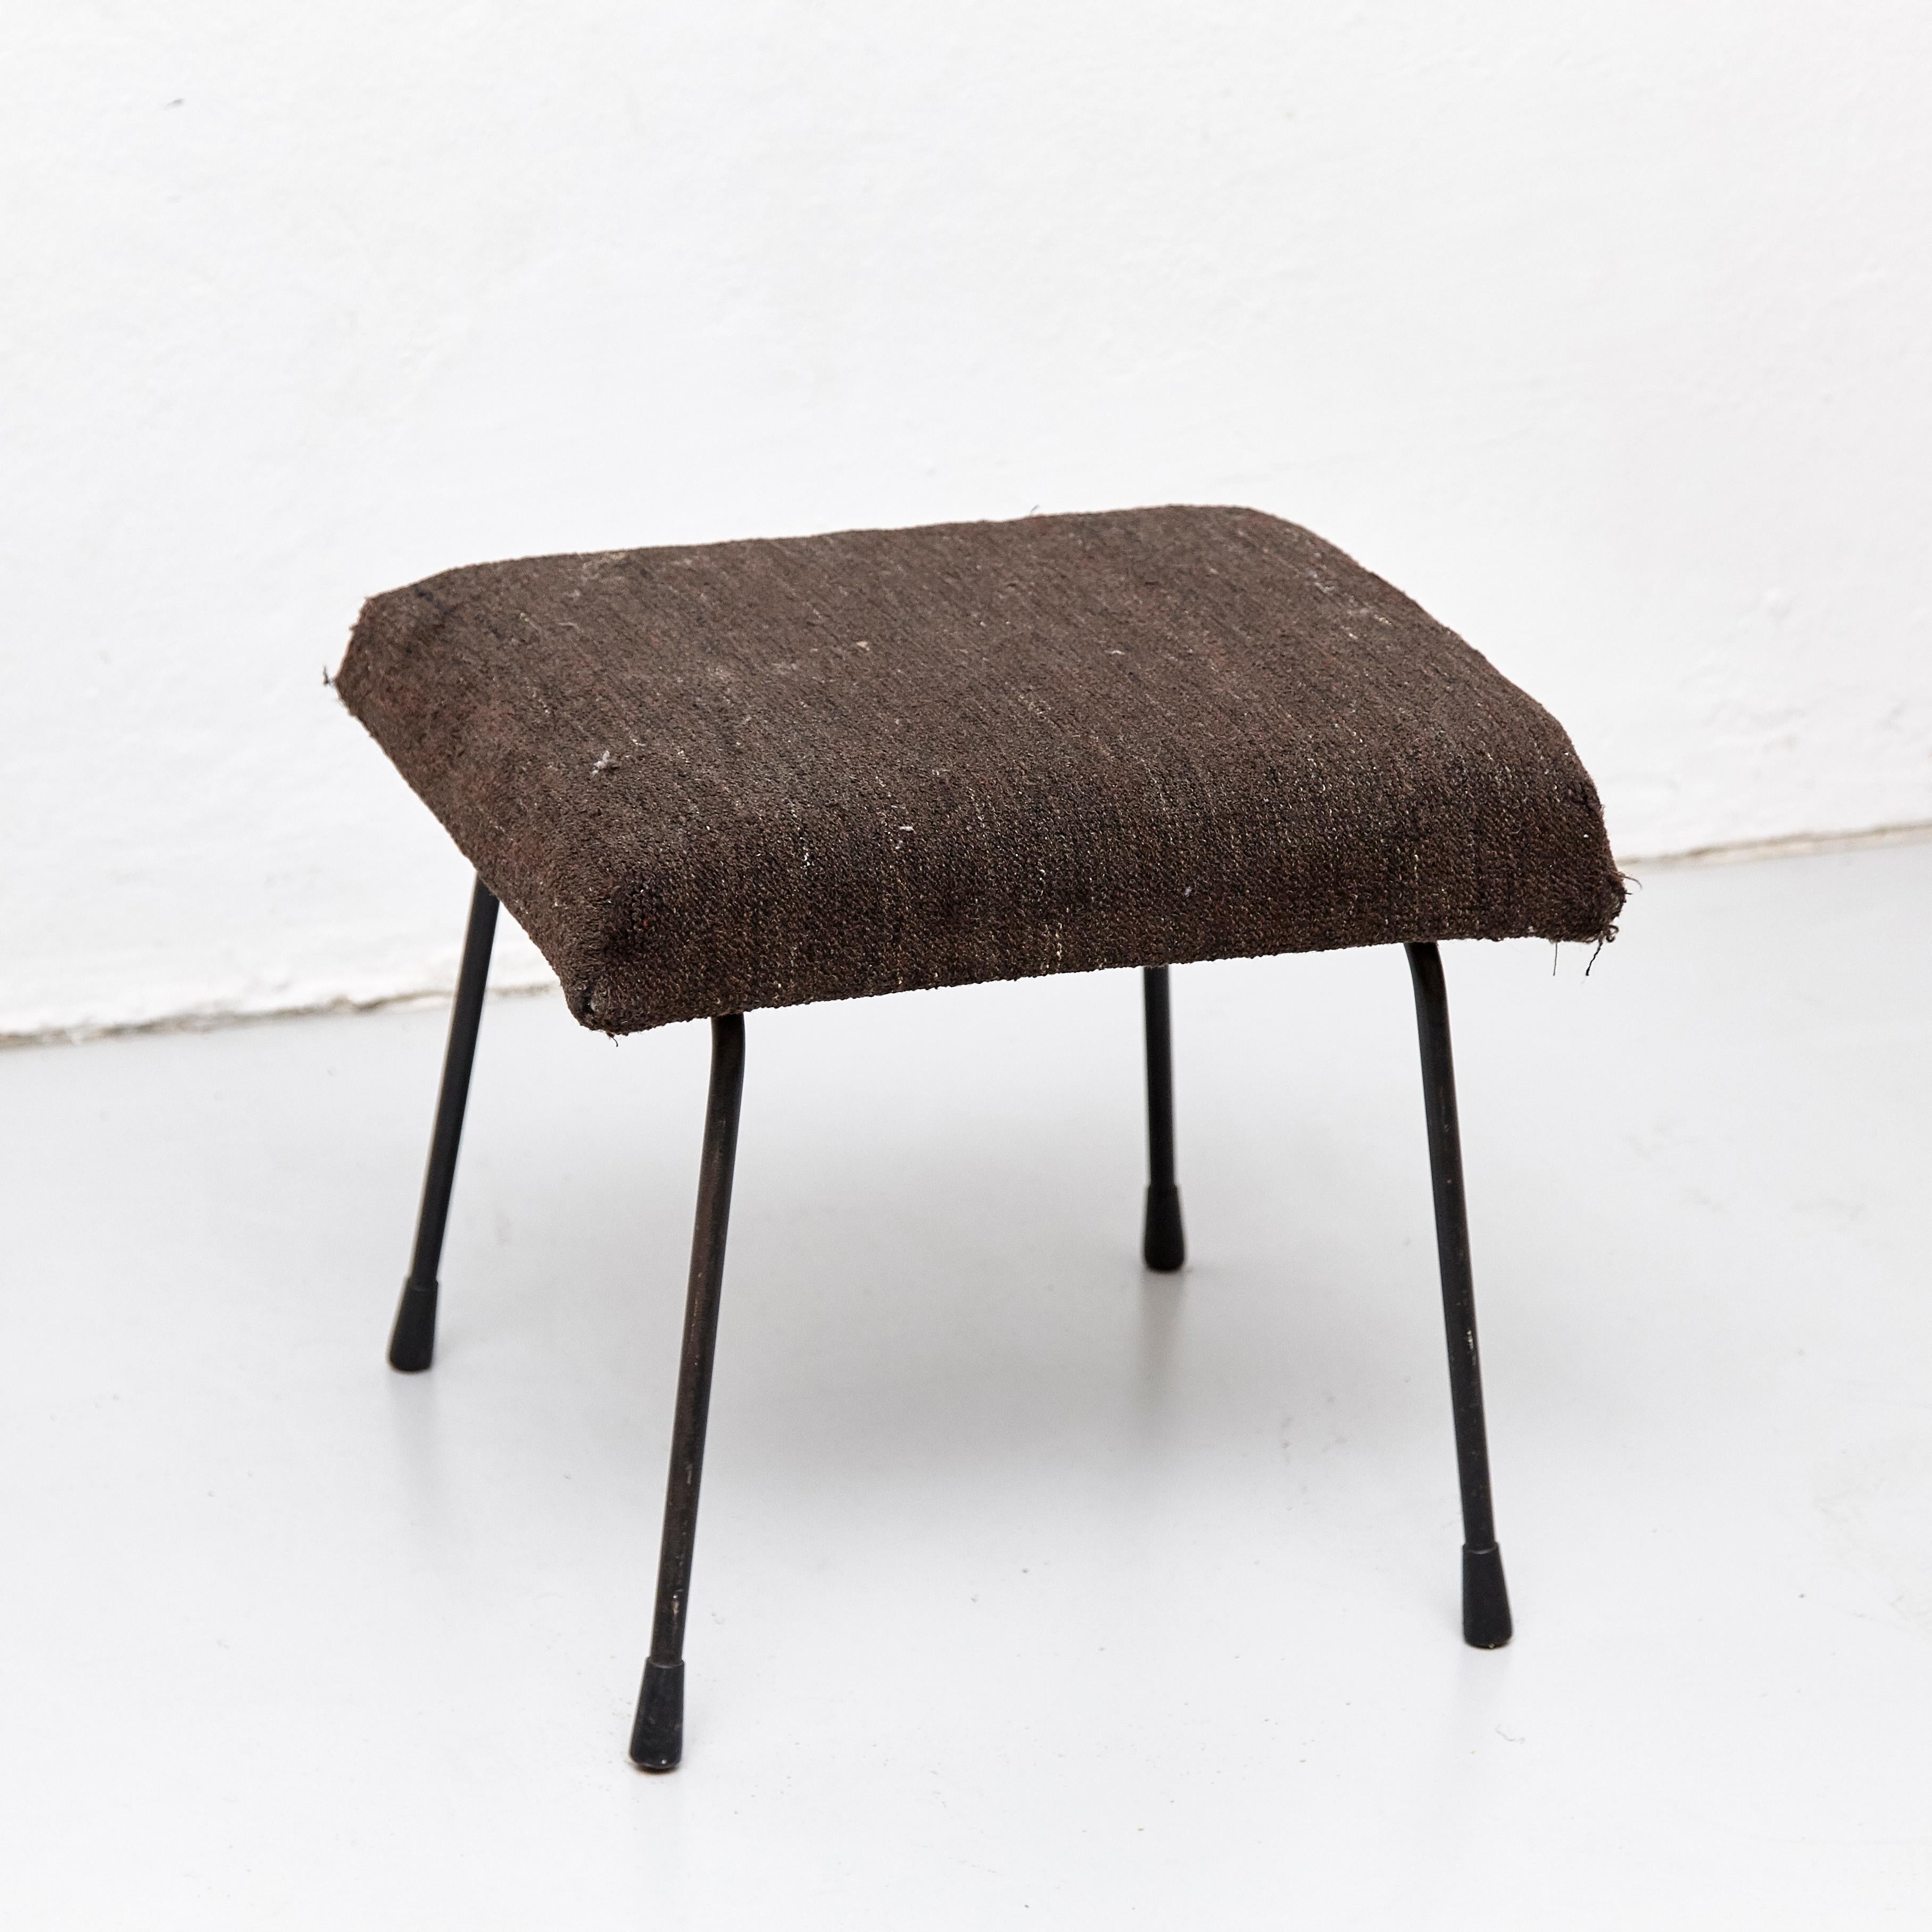 Dutch Wim Rietveld Mid-Century Modern Footstool